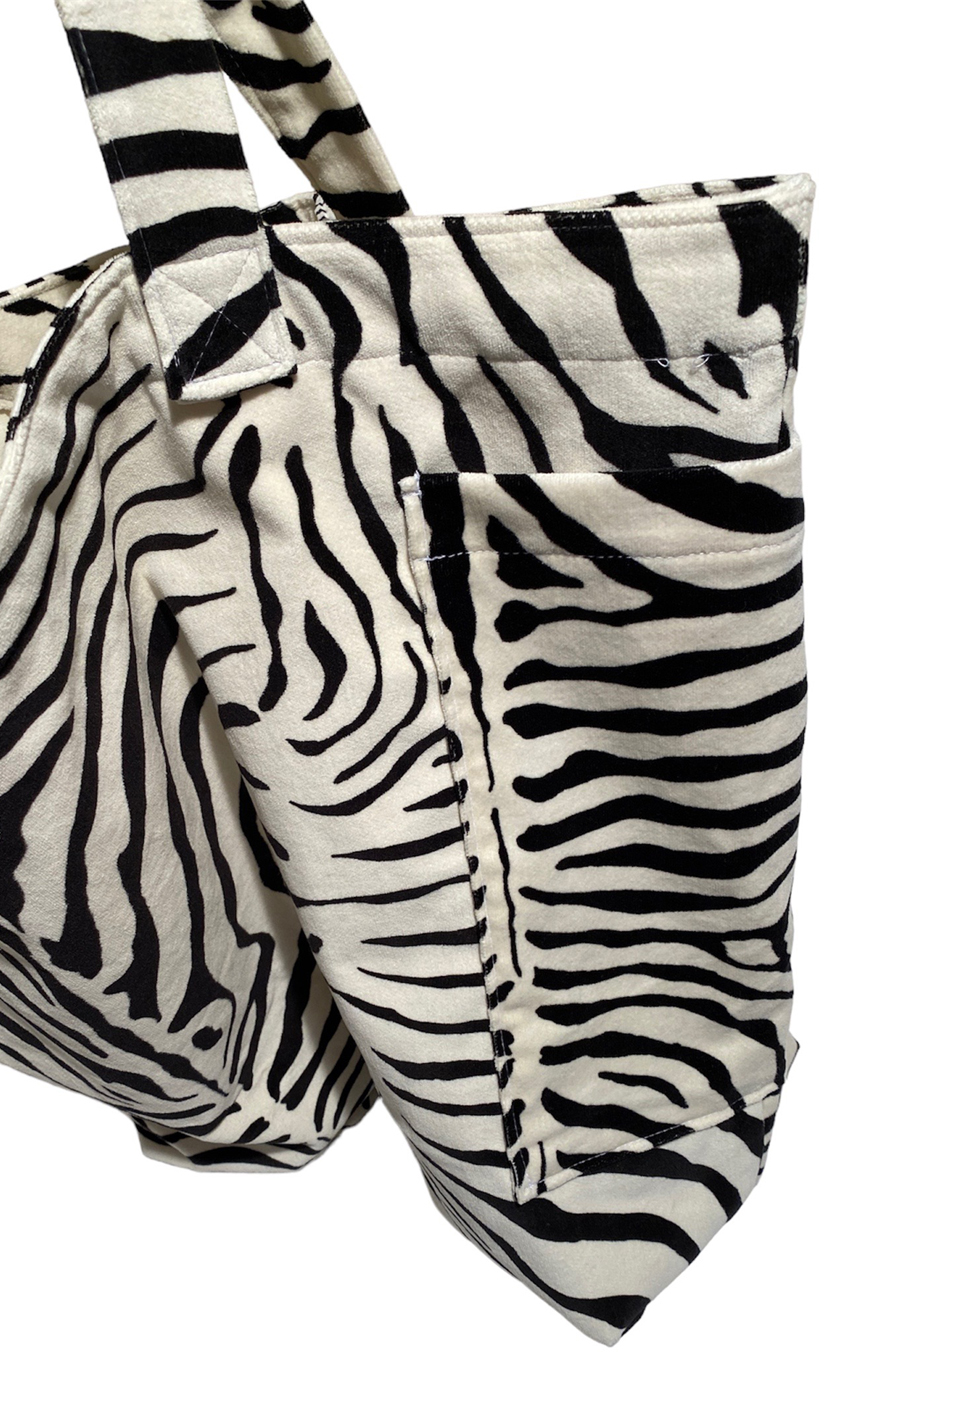 faux suede zebra print beach bag side pocket view